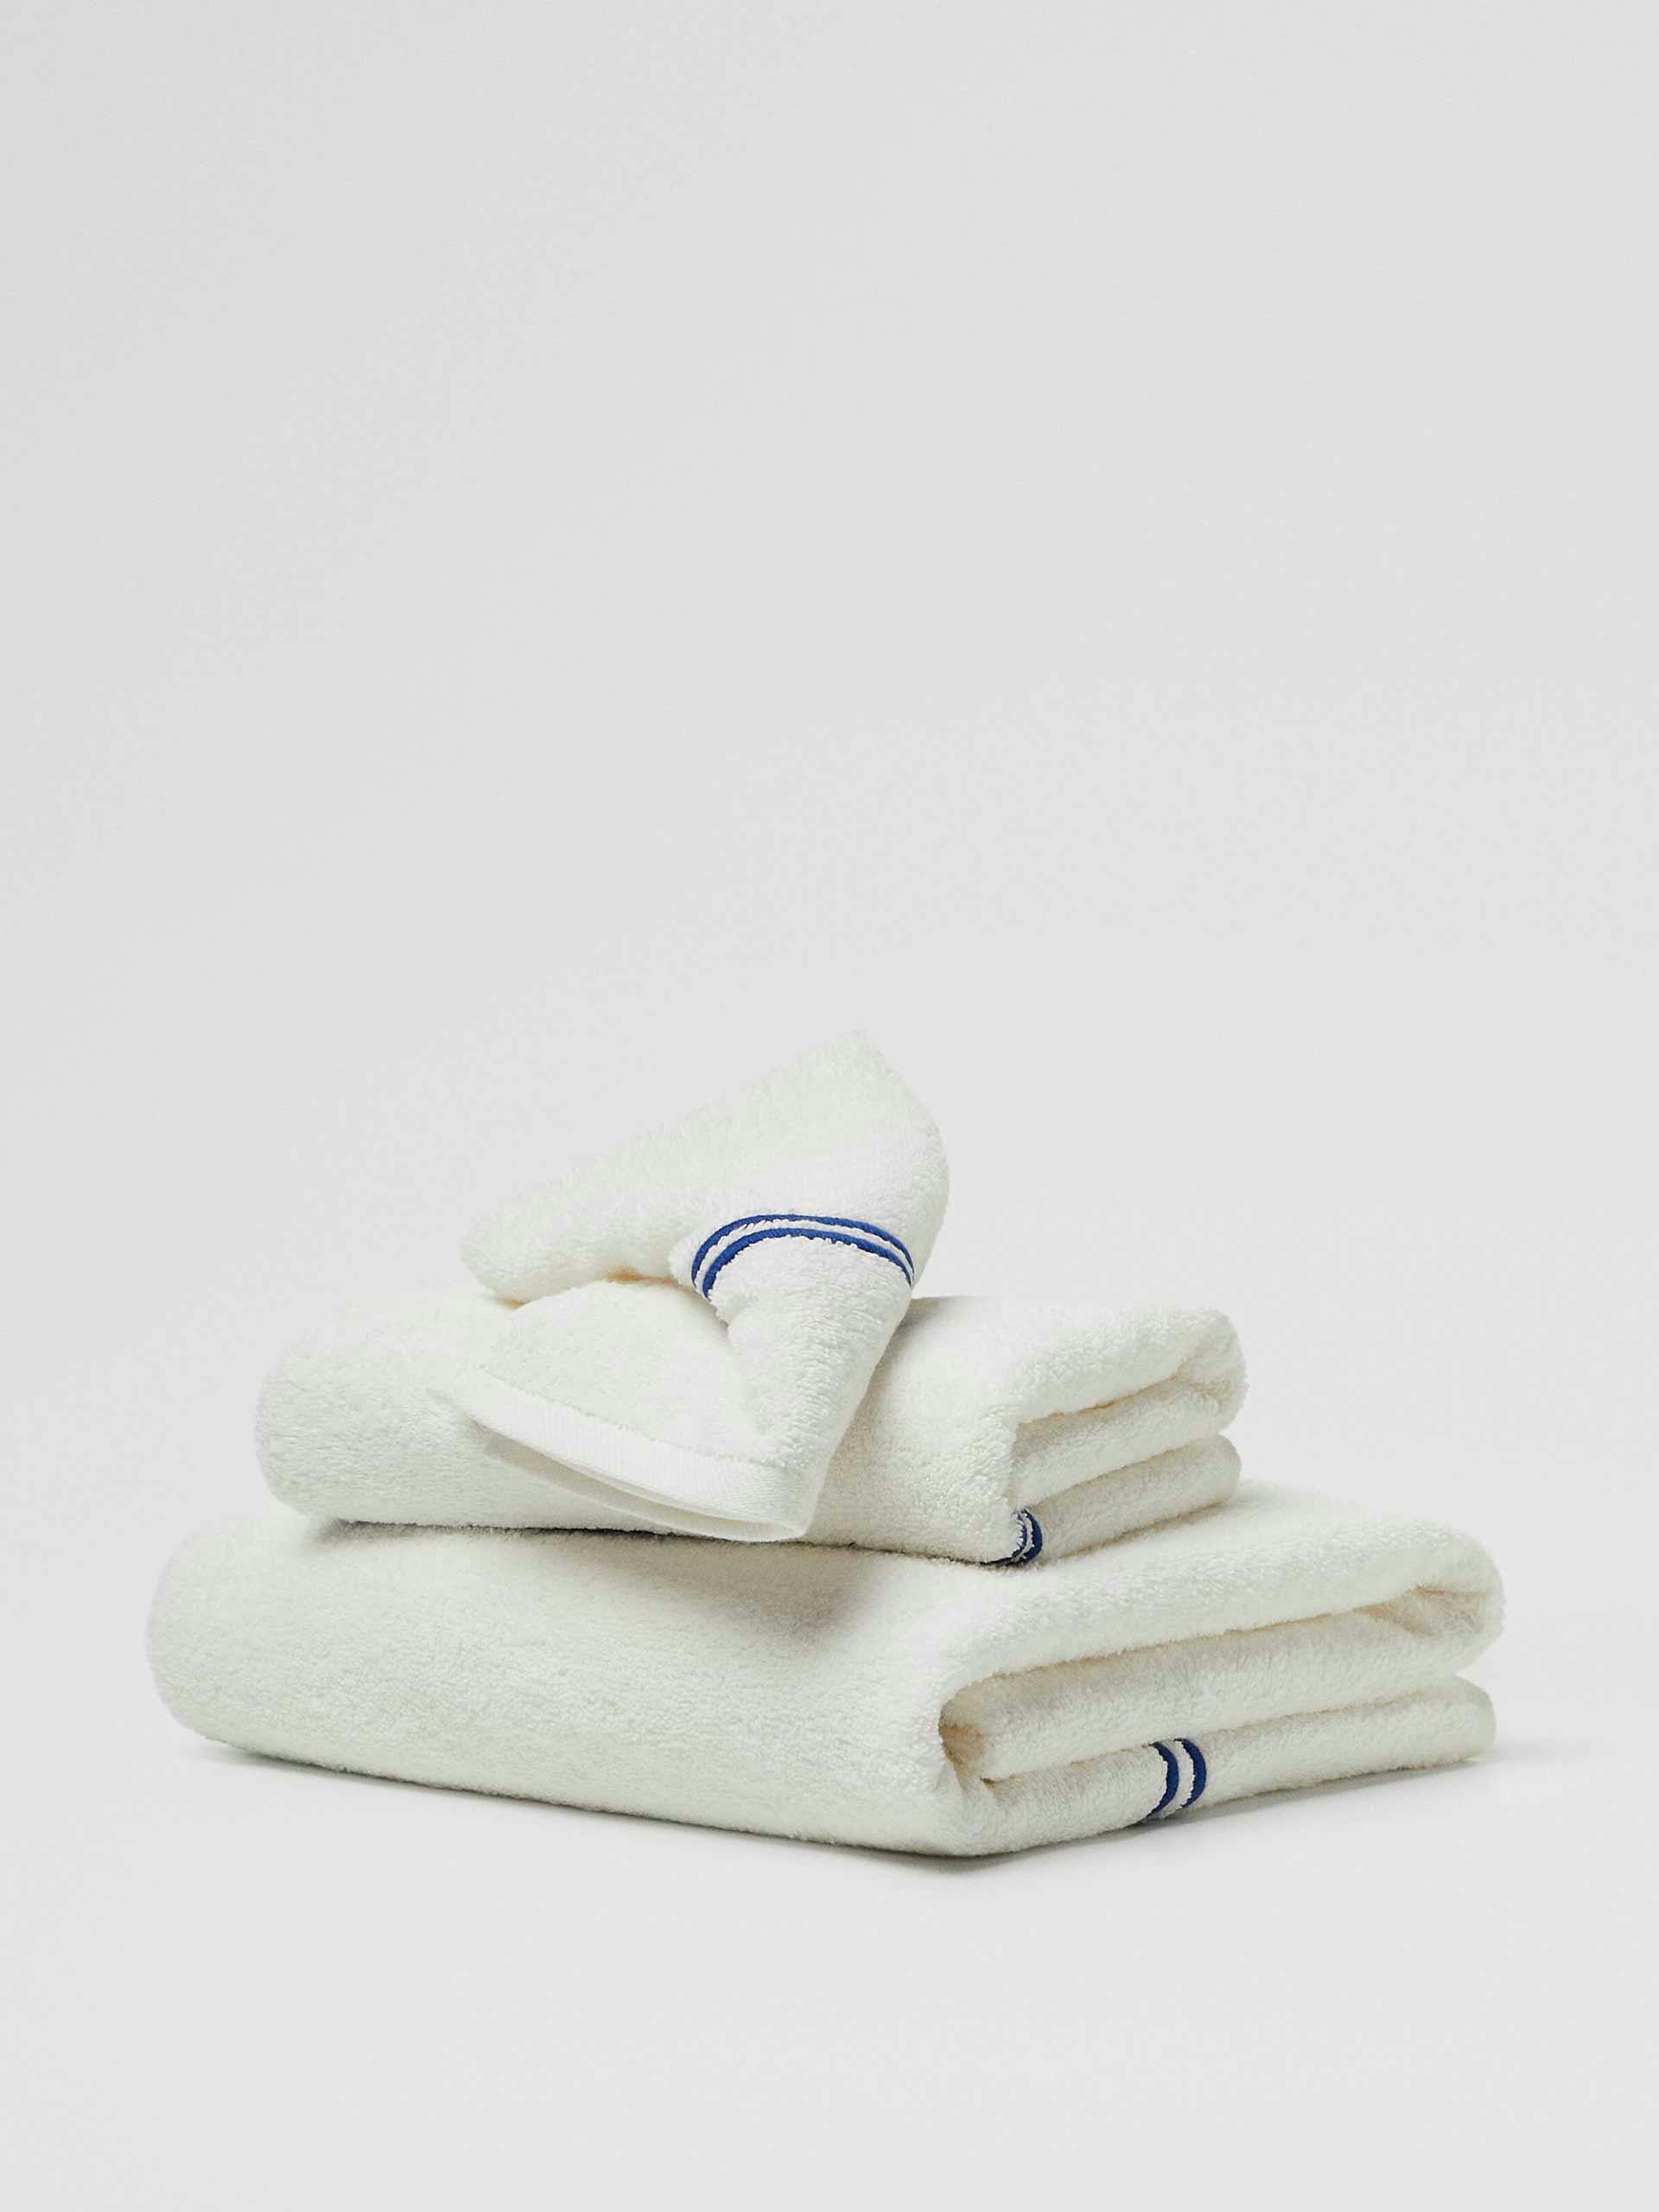 Cotton hand towel